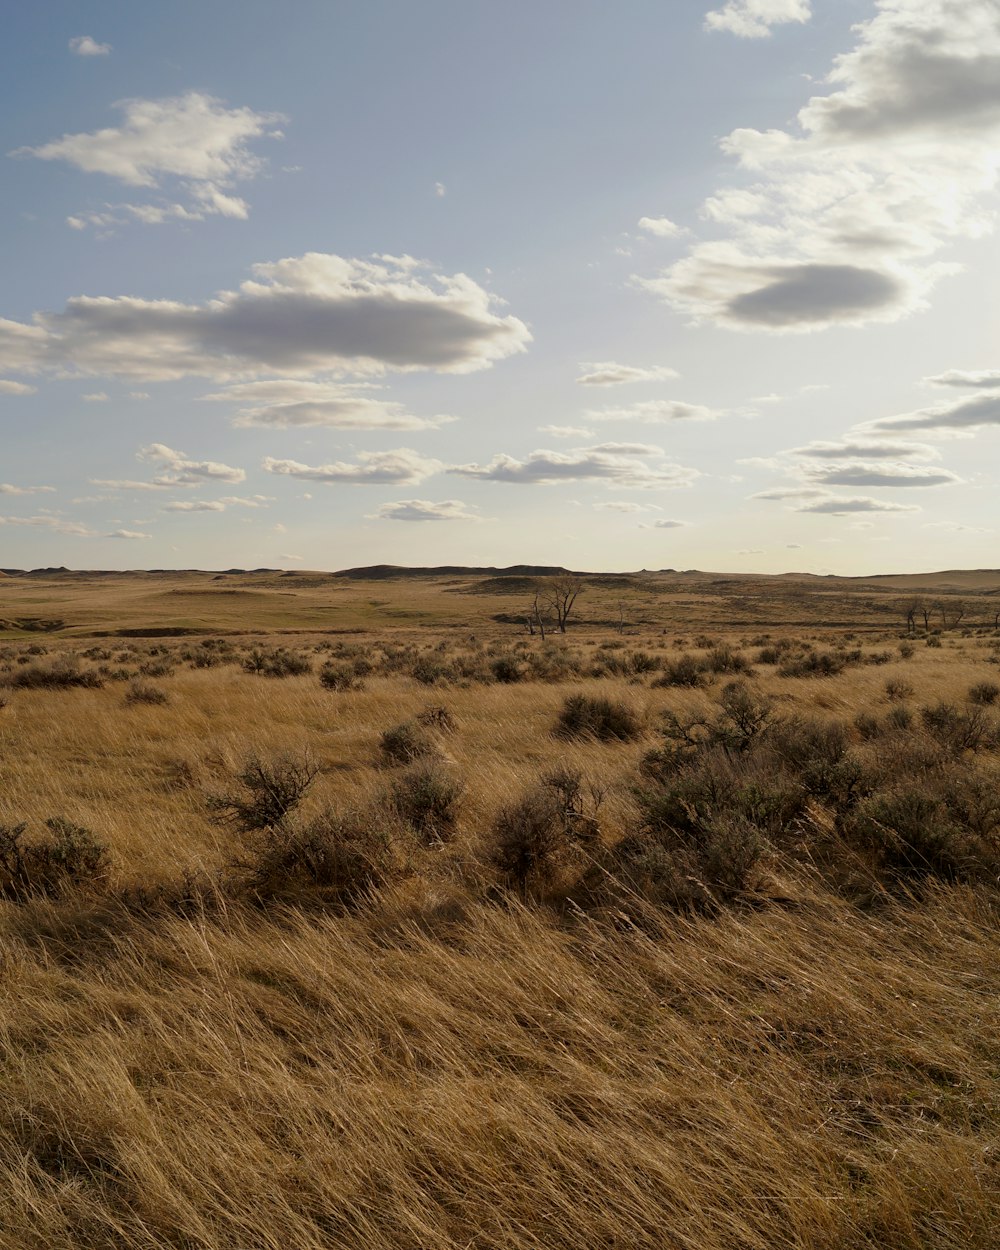 brown grass field under blue sky during daytime